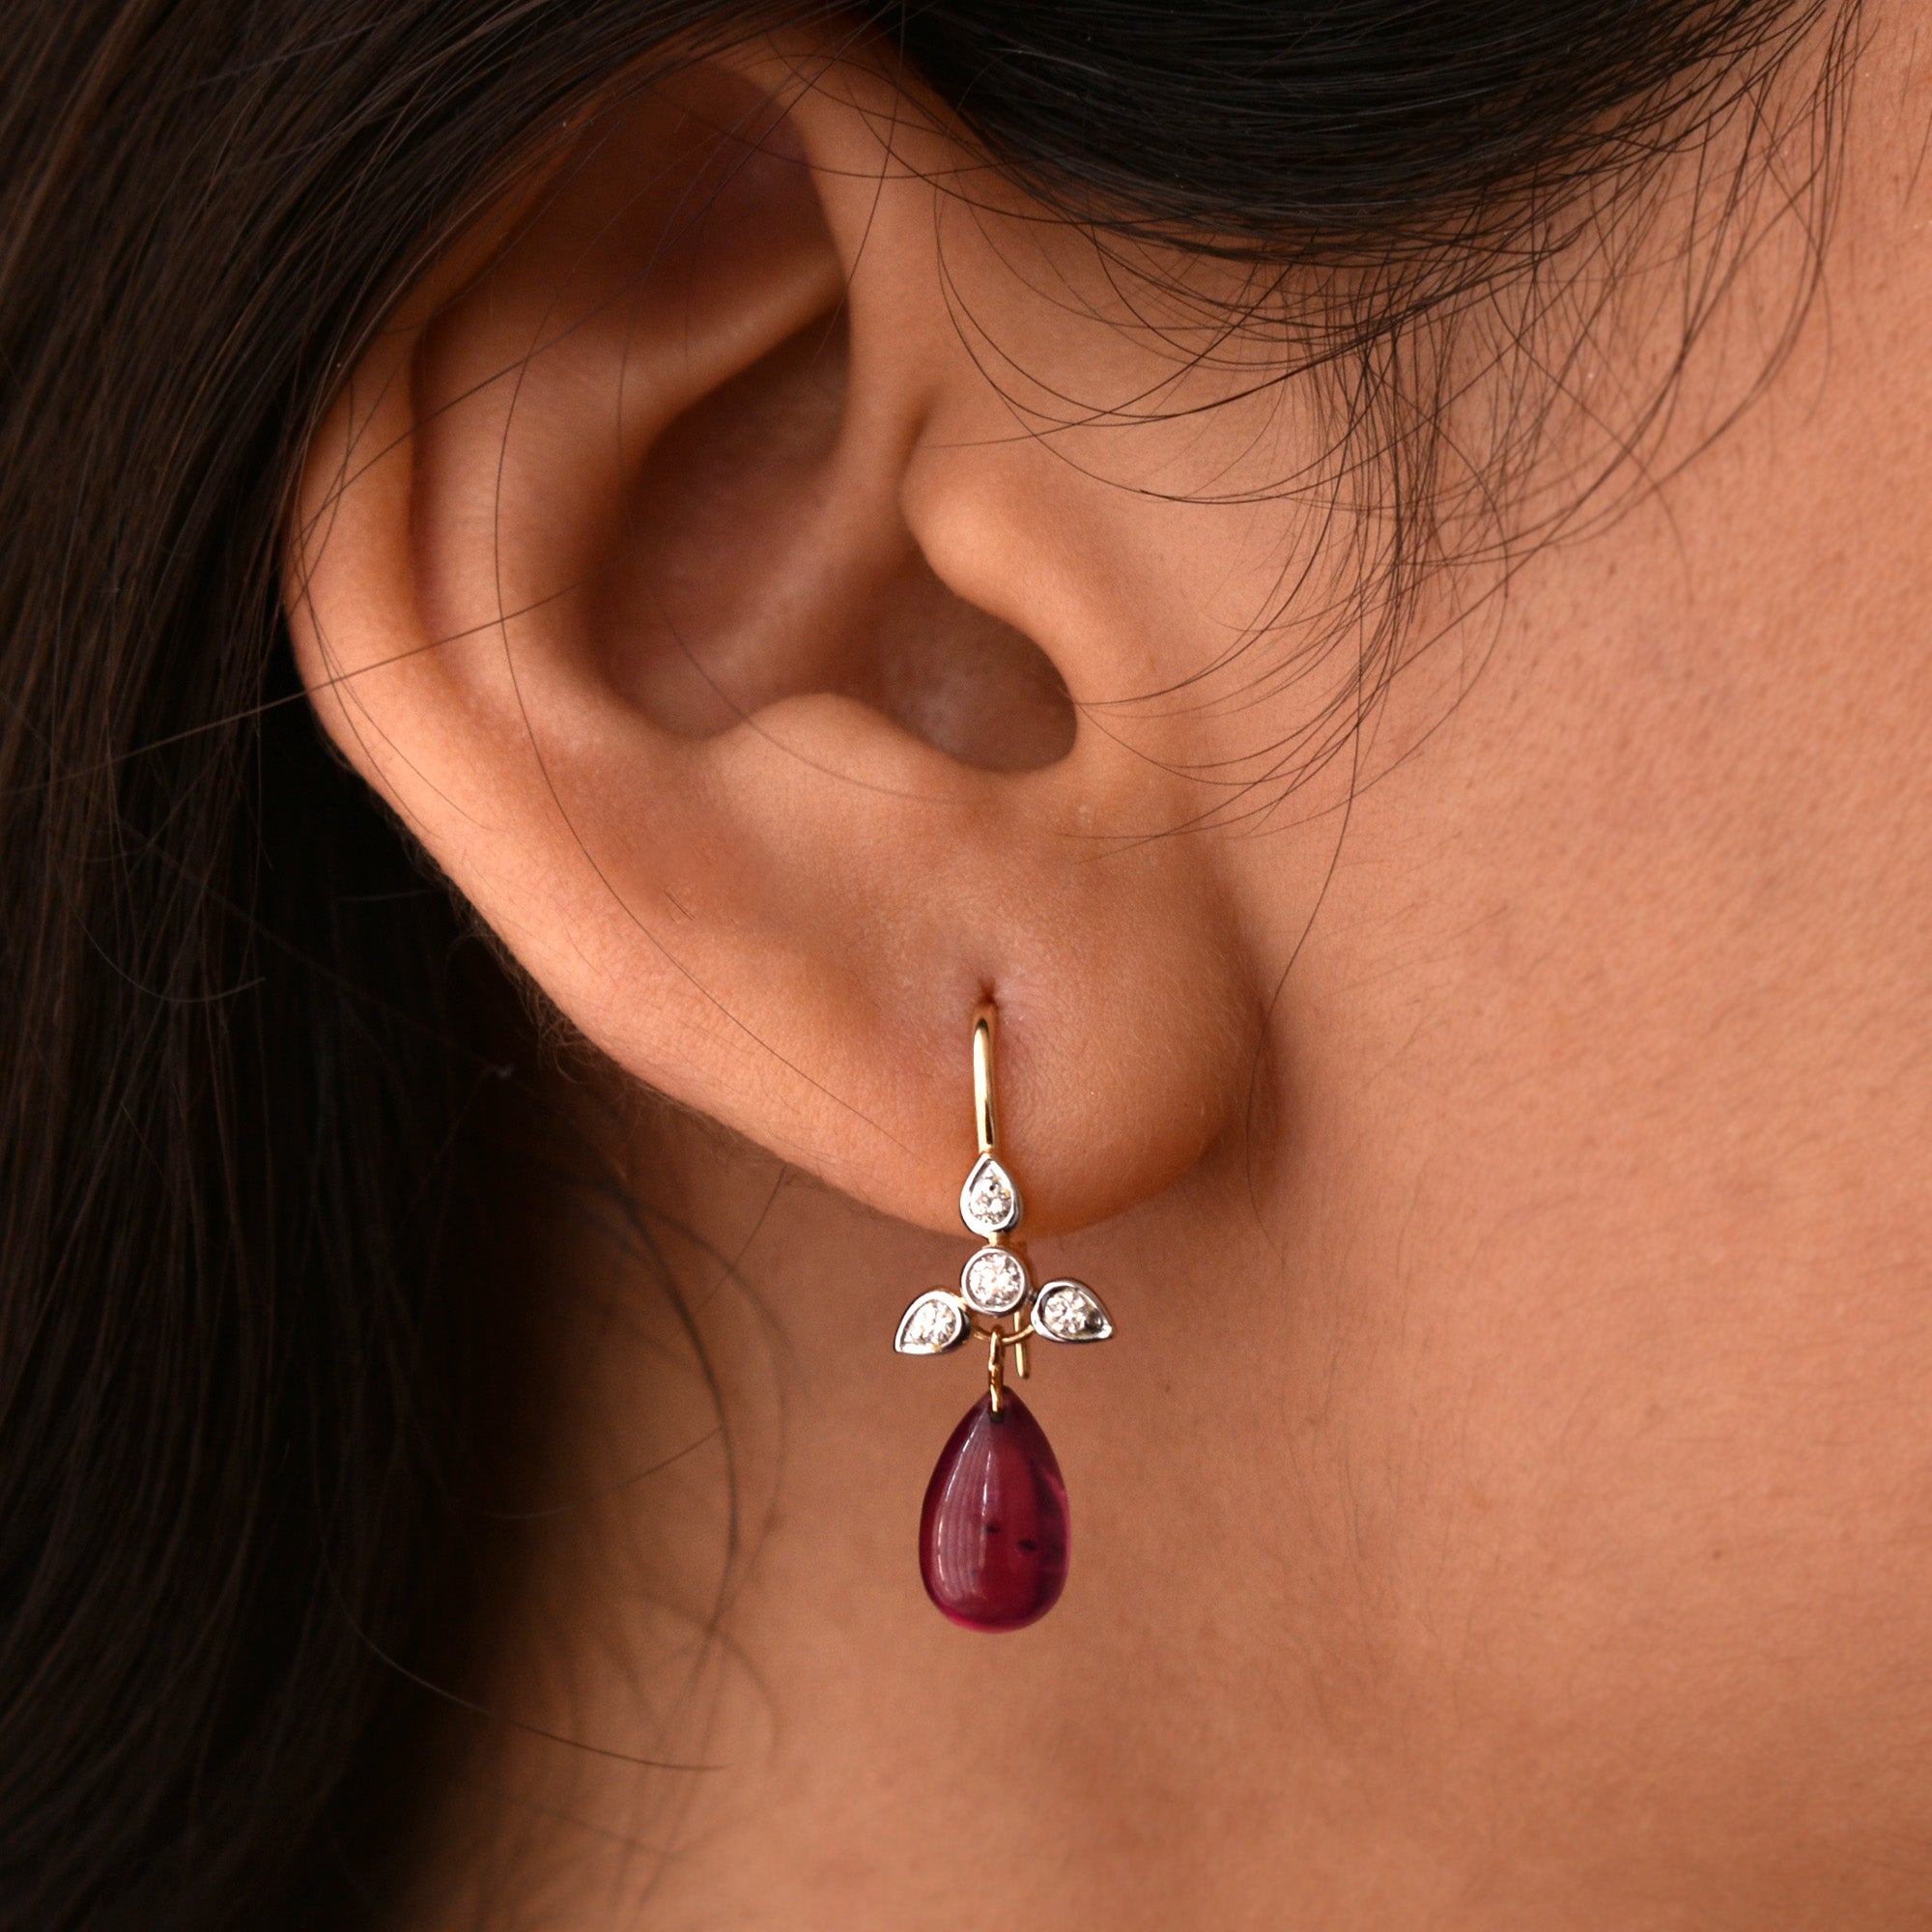 Beautiful Amethyst Quartz Raw Gemstone Long Dangle Brass Gold Plated Bezel  Setting Ear Wire Earrings at Rs 600/pair | जेमस्टोन की बालियां in Jaipur |  ID: 23367029973